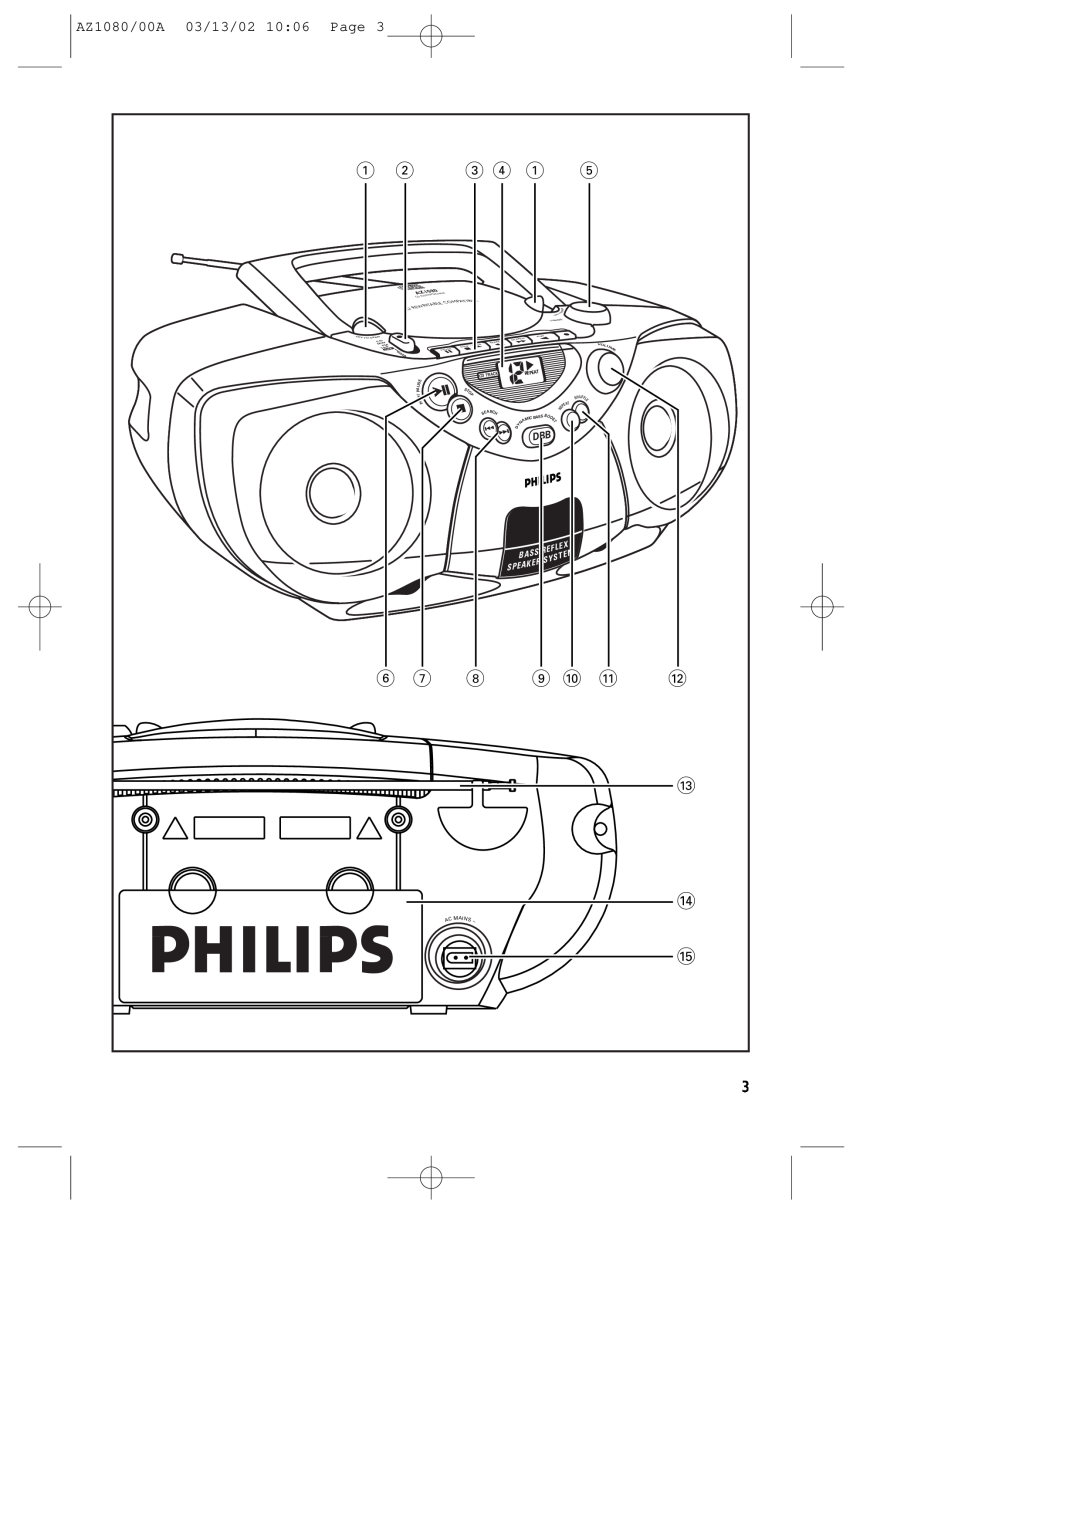 Philips AZ1080/00 manual 